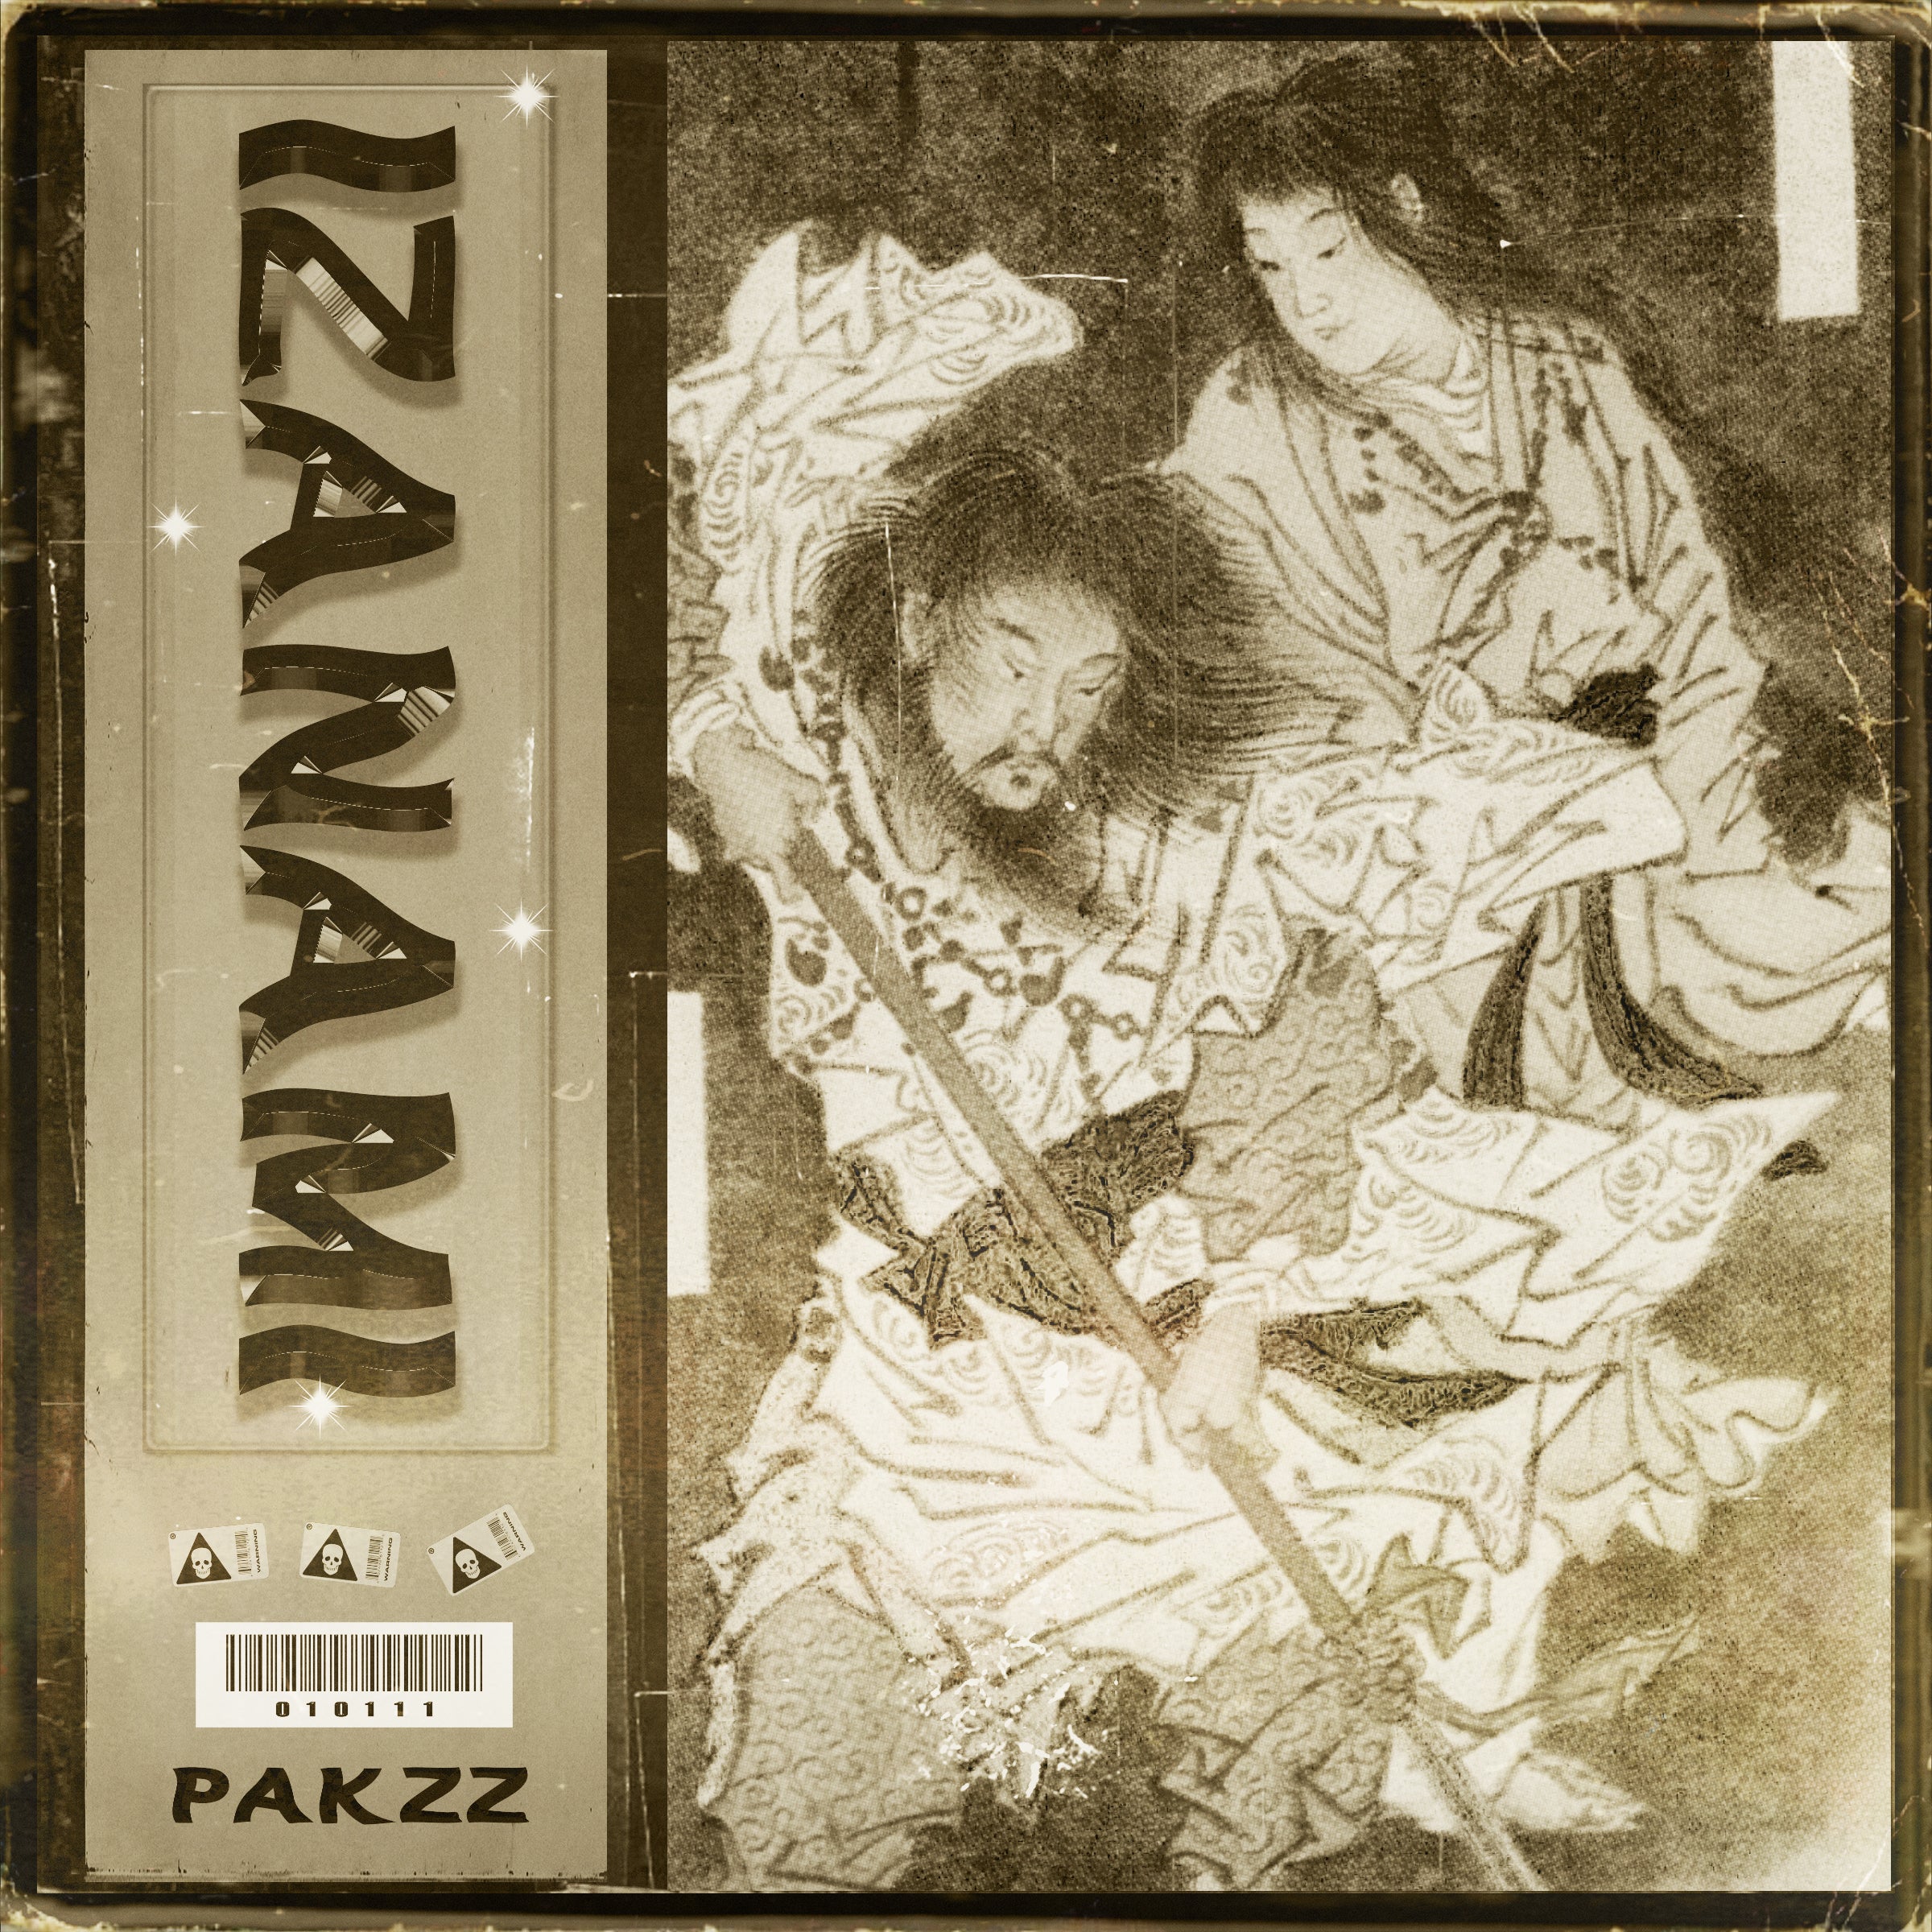 The Izanami Drumkit